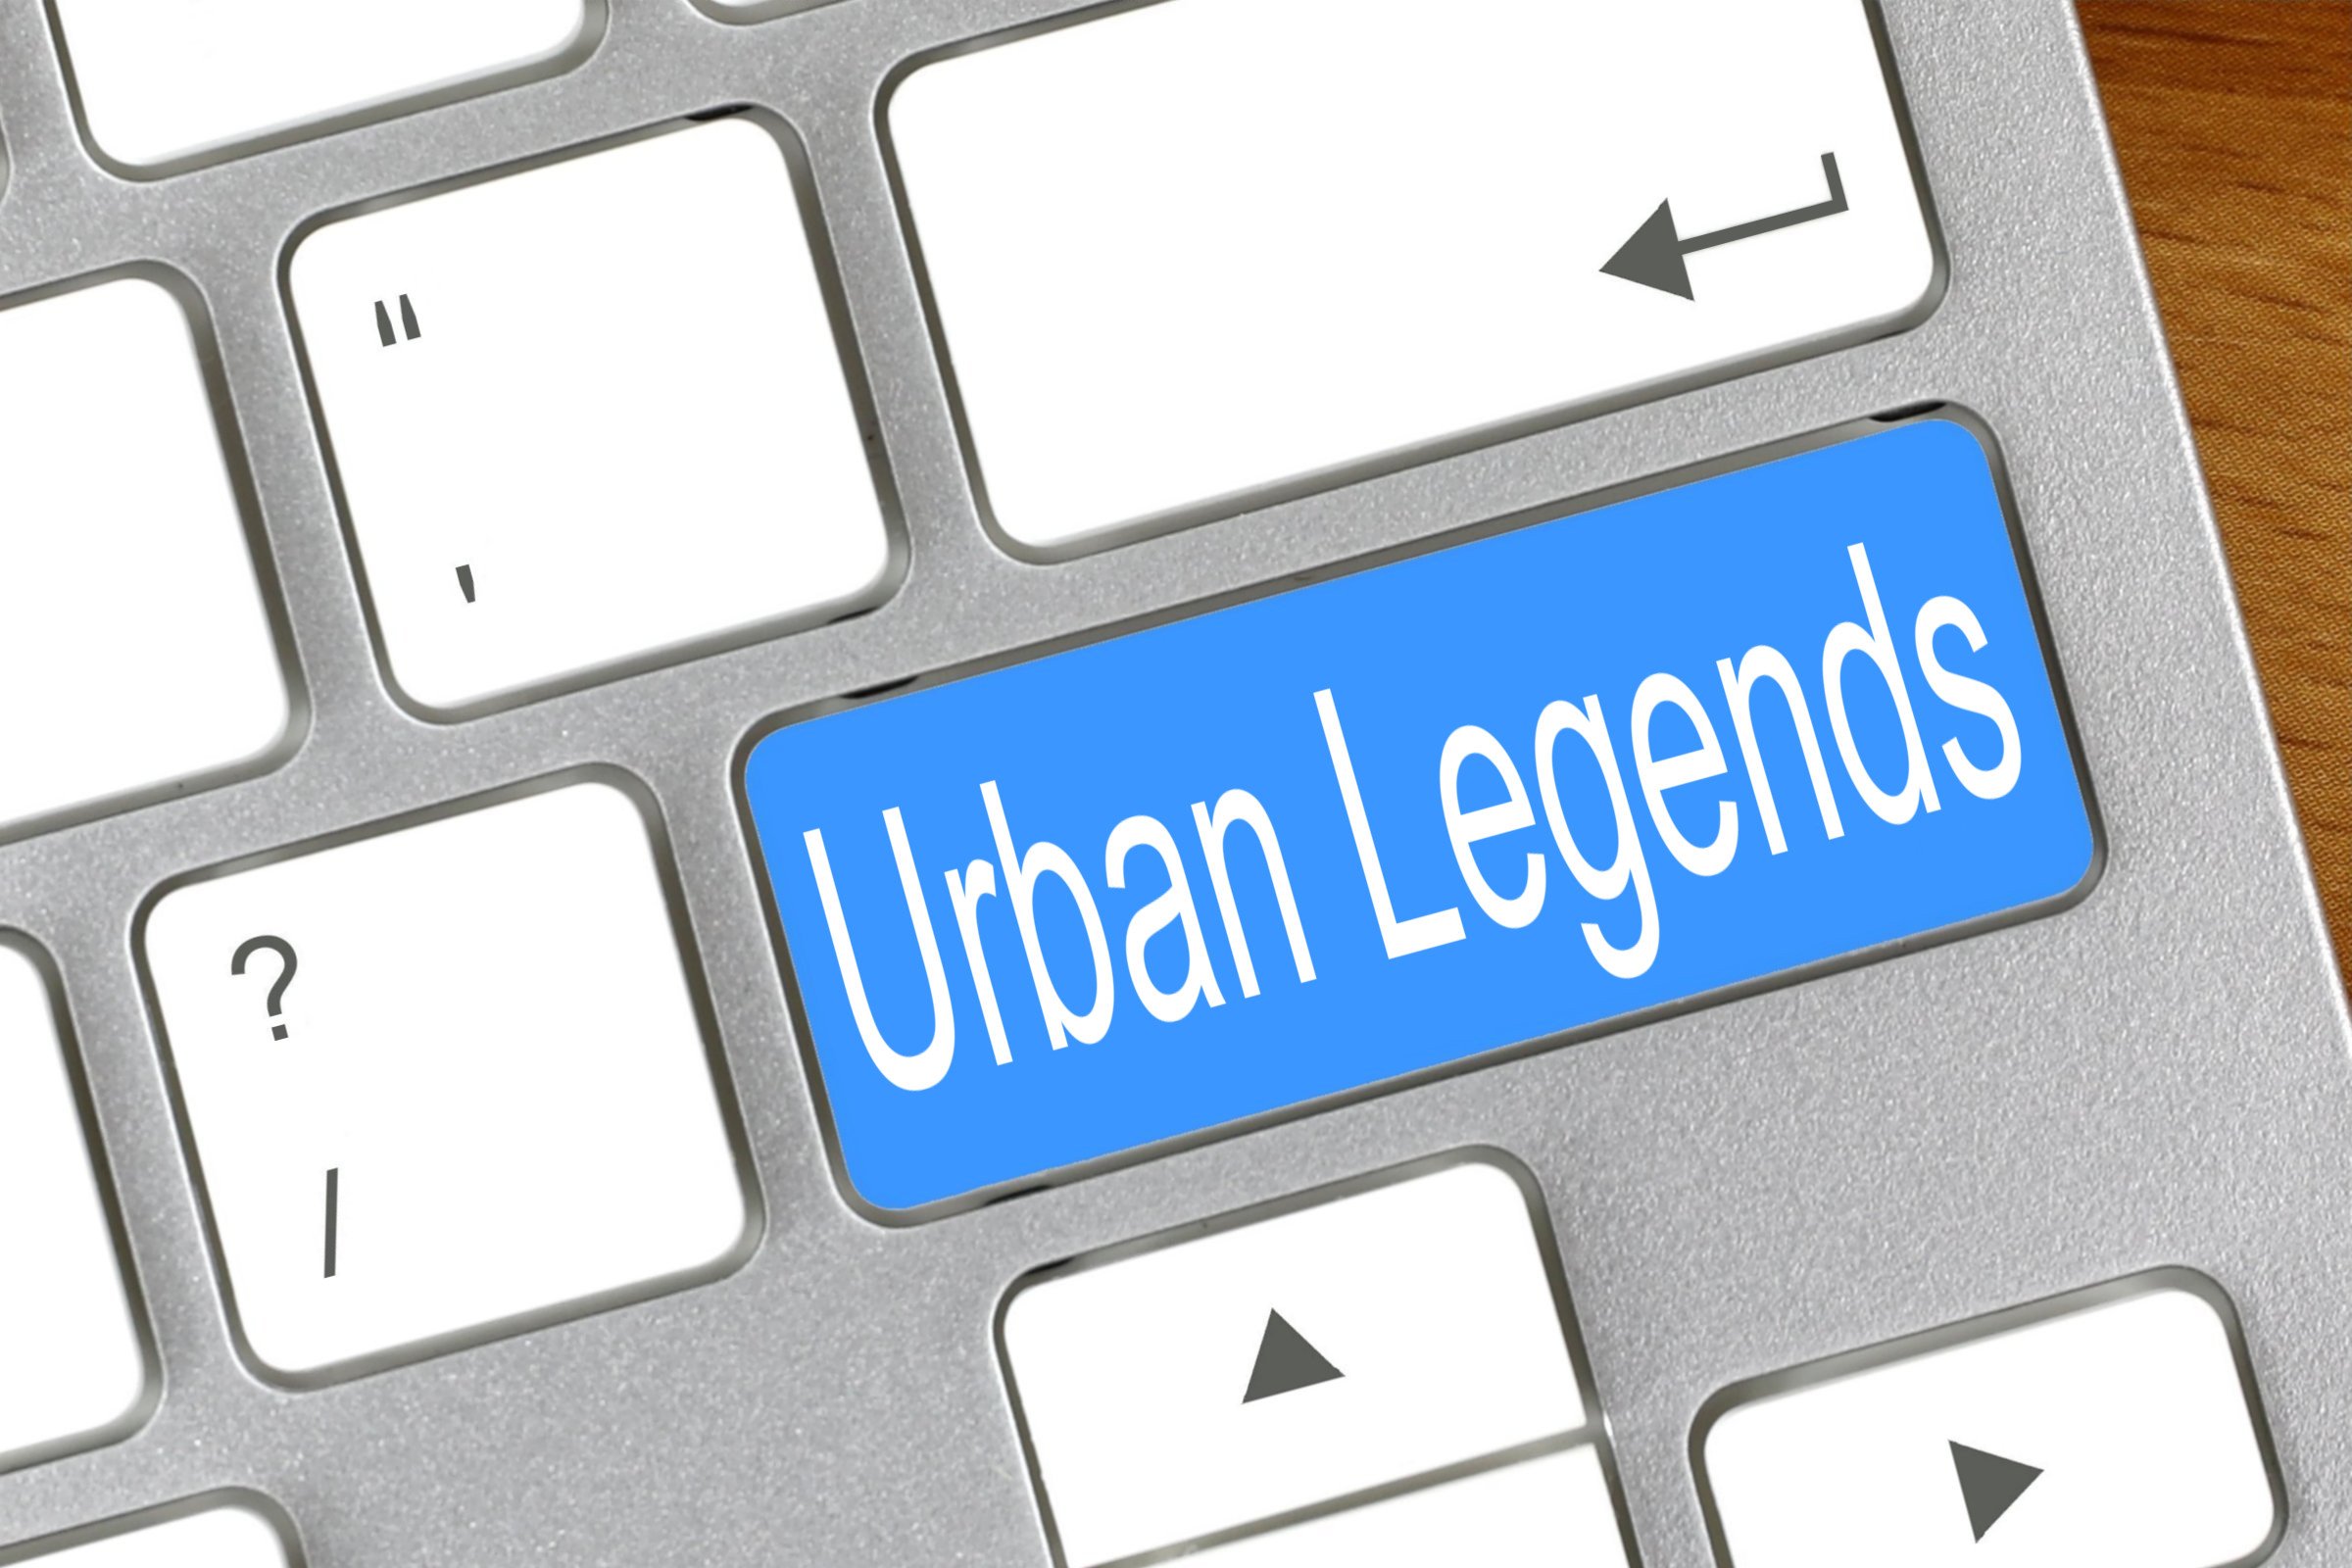 urban legends